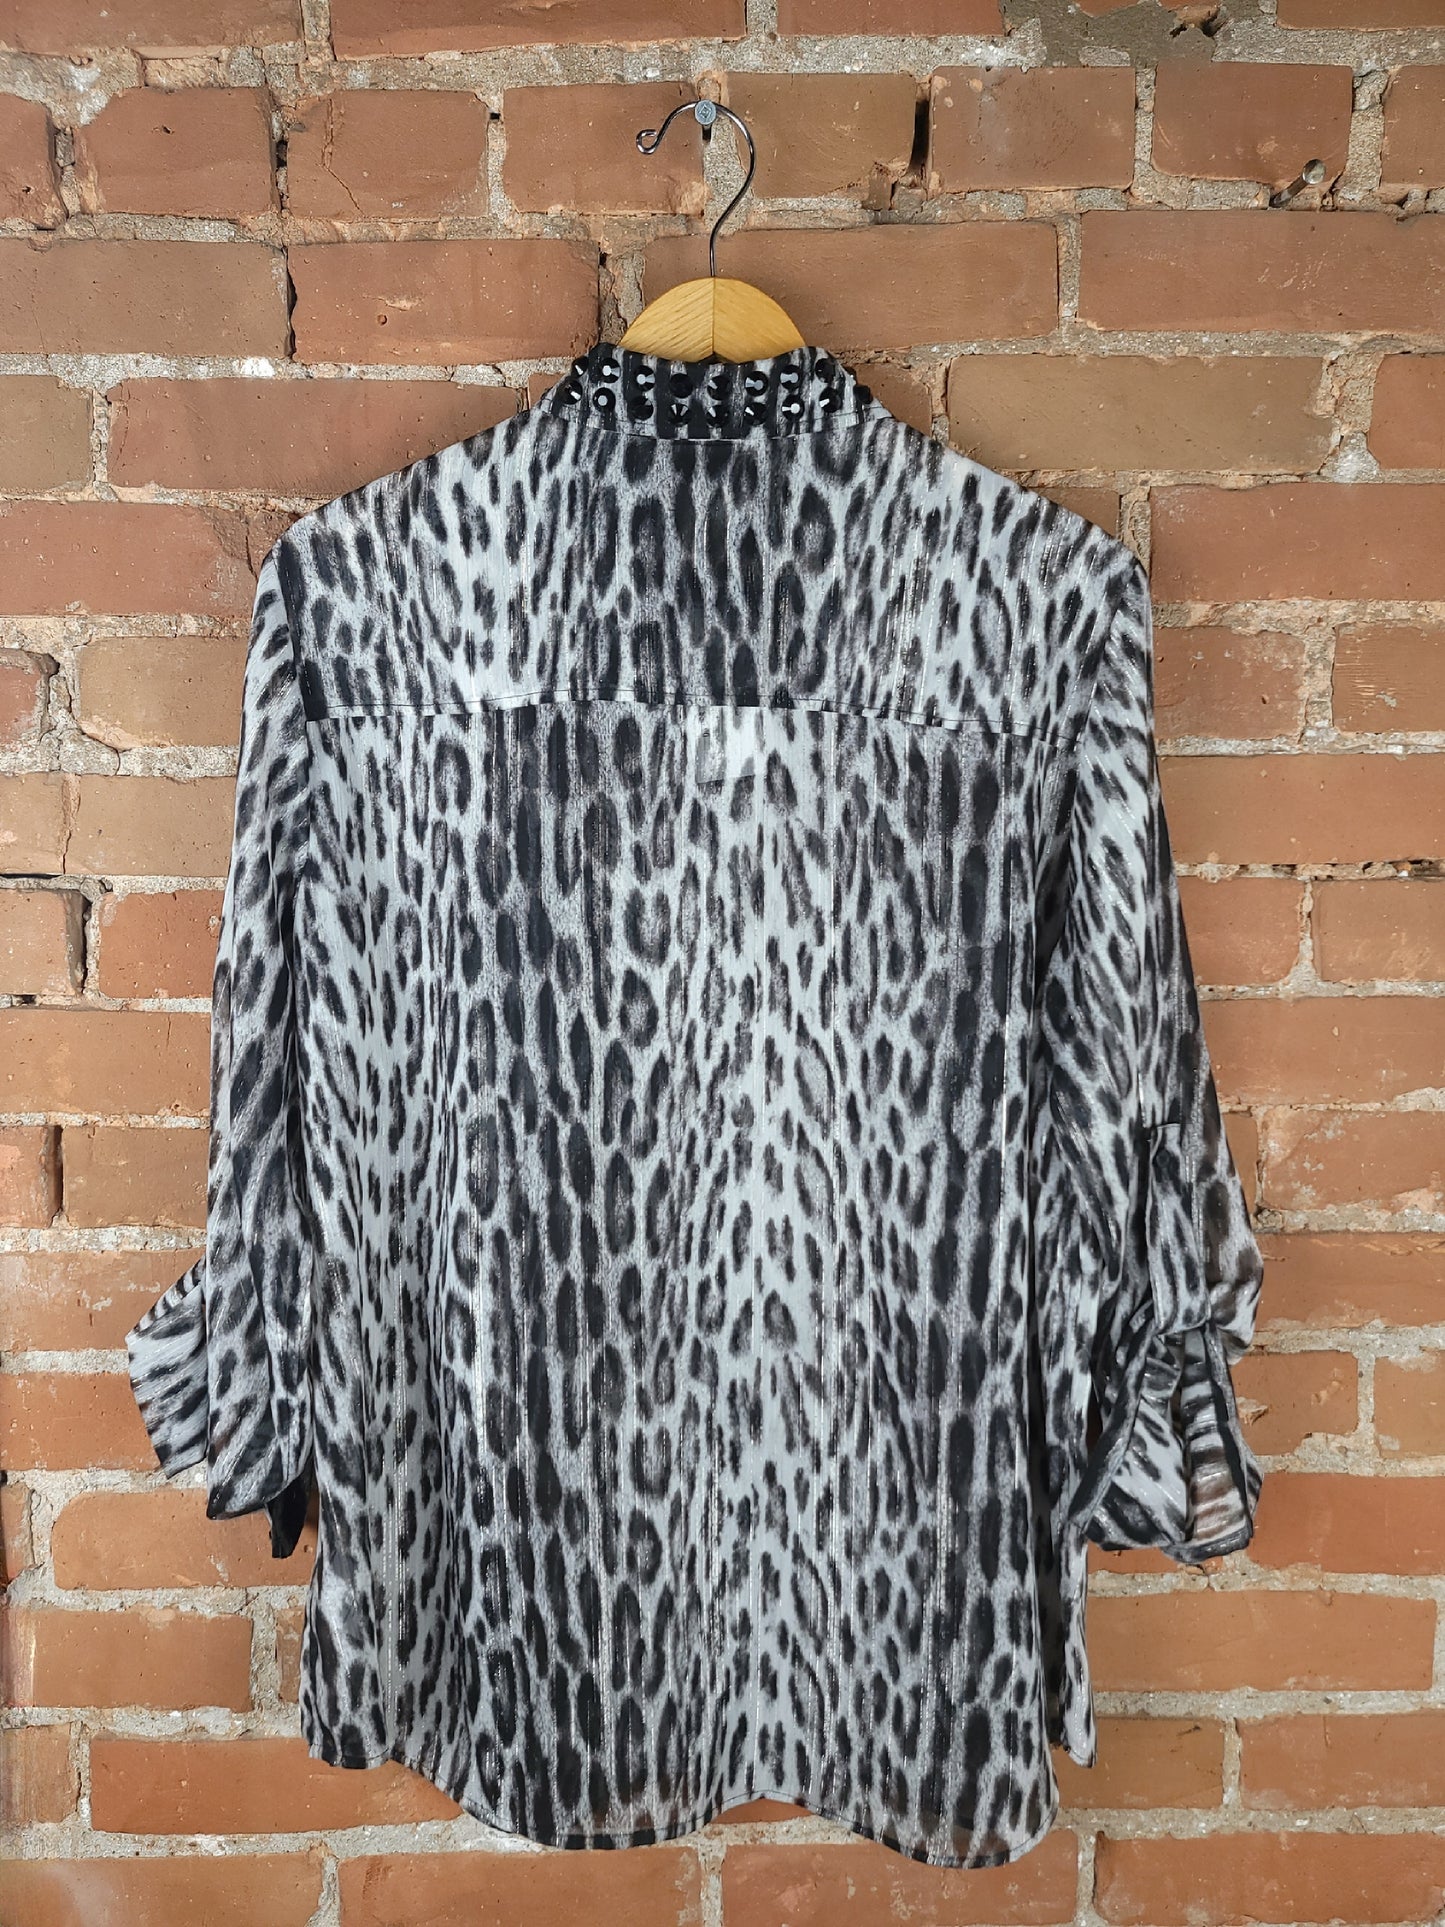 Michael Kors Black and Grey Cheetah Print Long Sleeve Button-Up